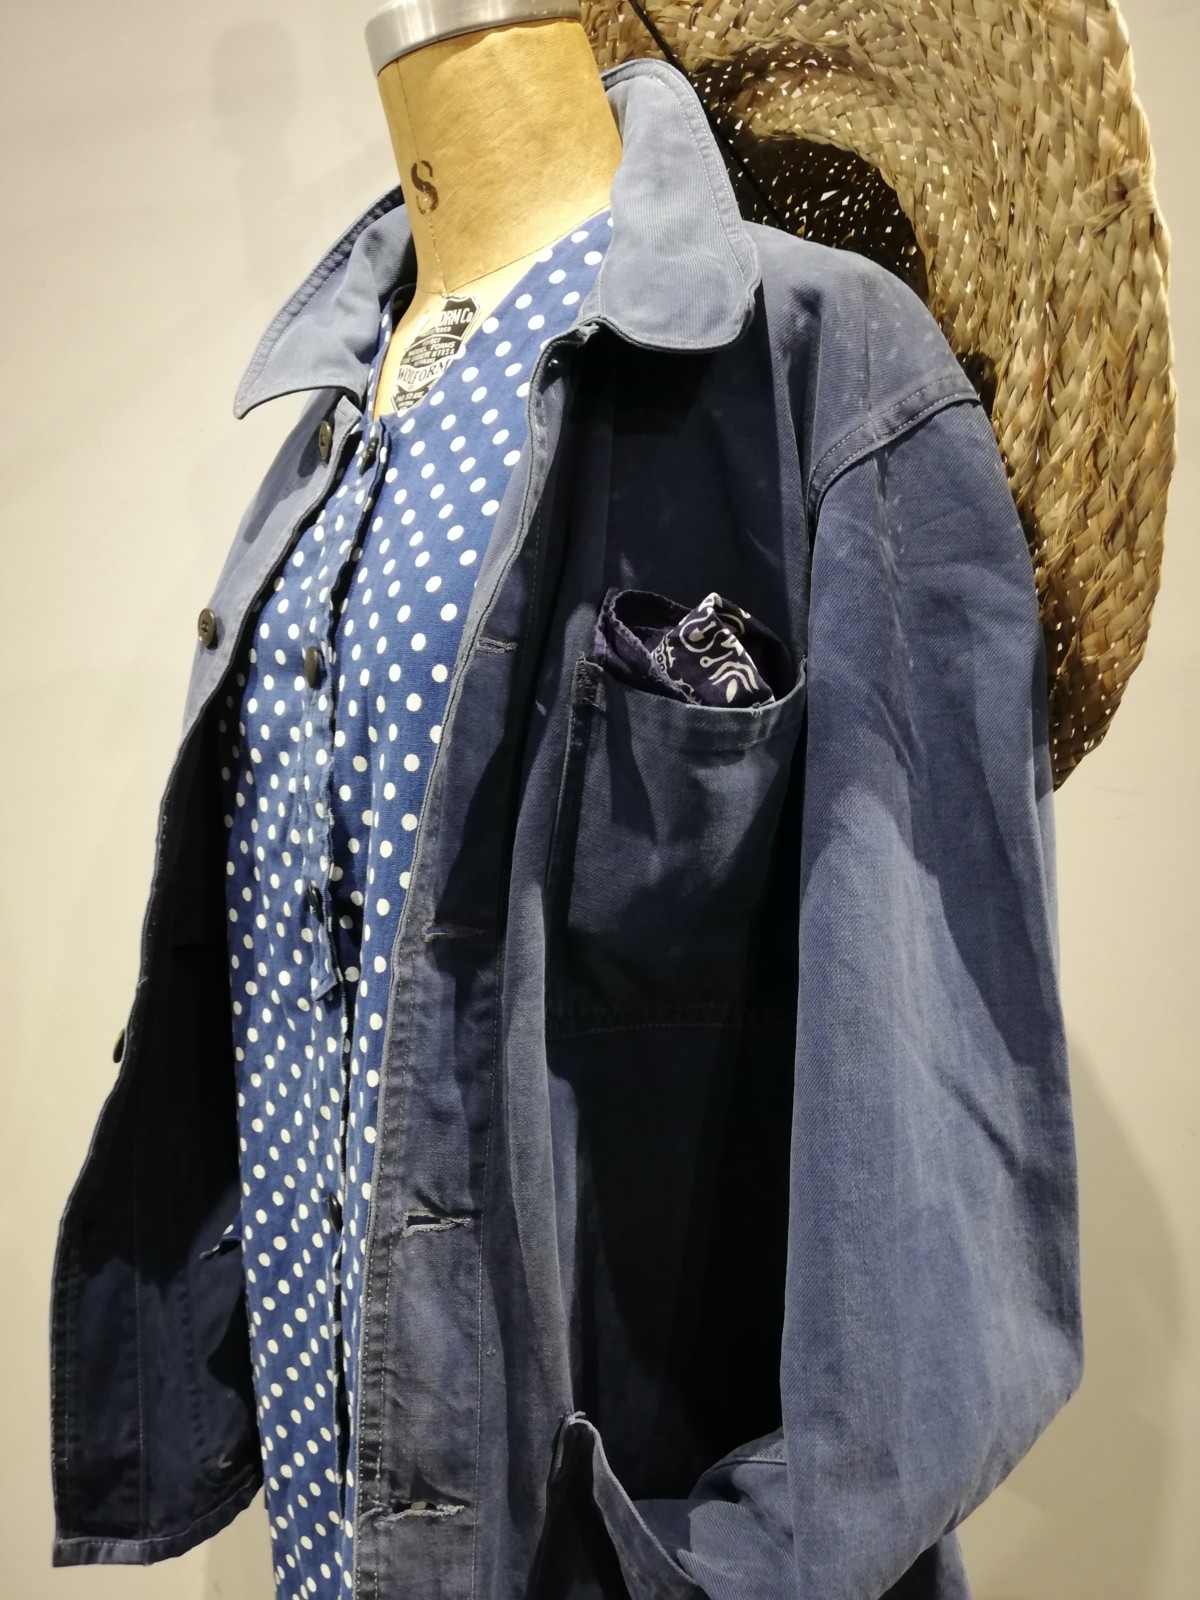 straw hat, French work jacket, indigo dot print gilet